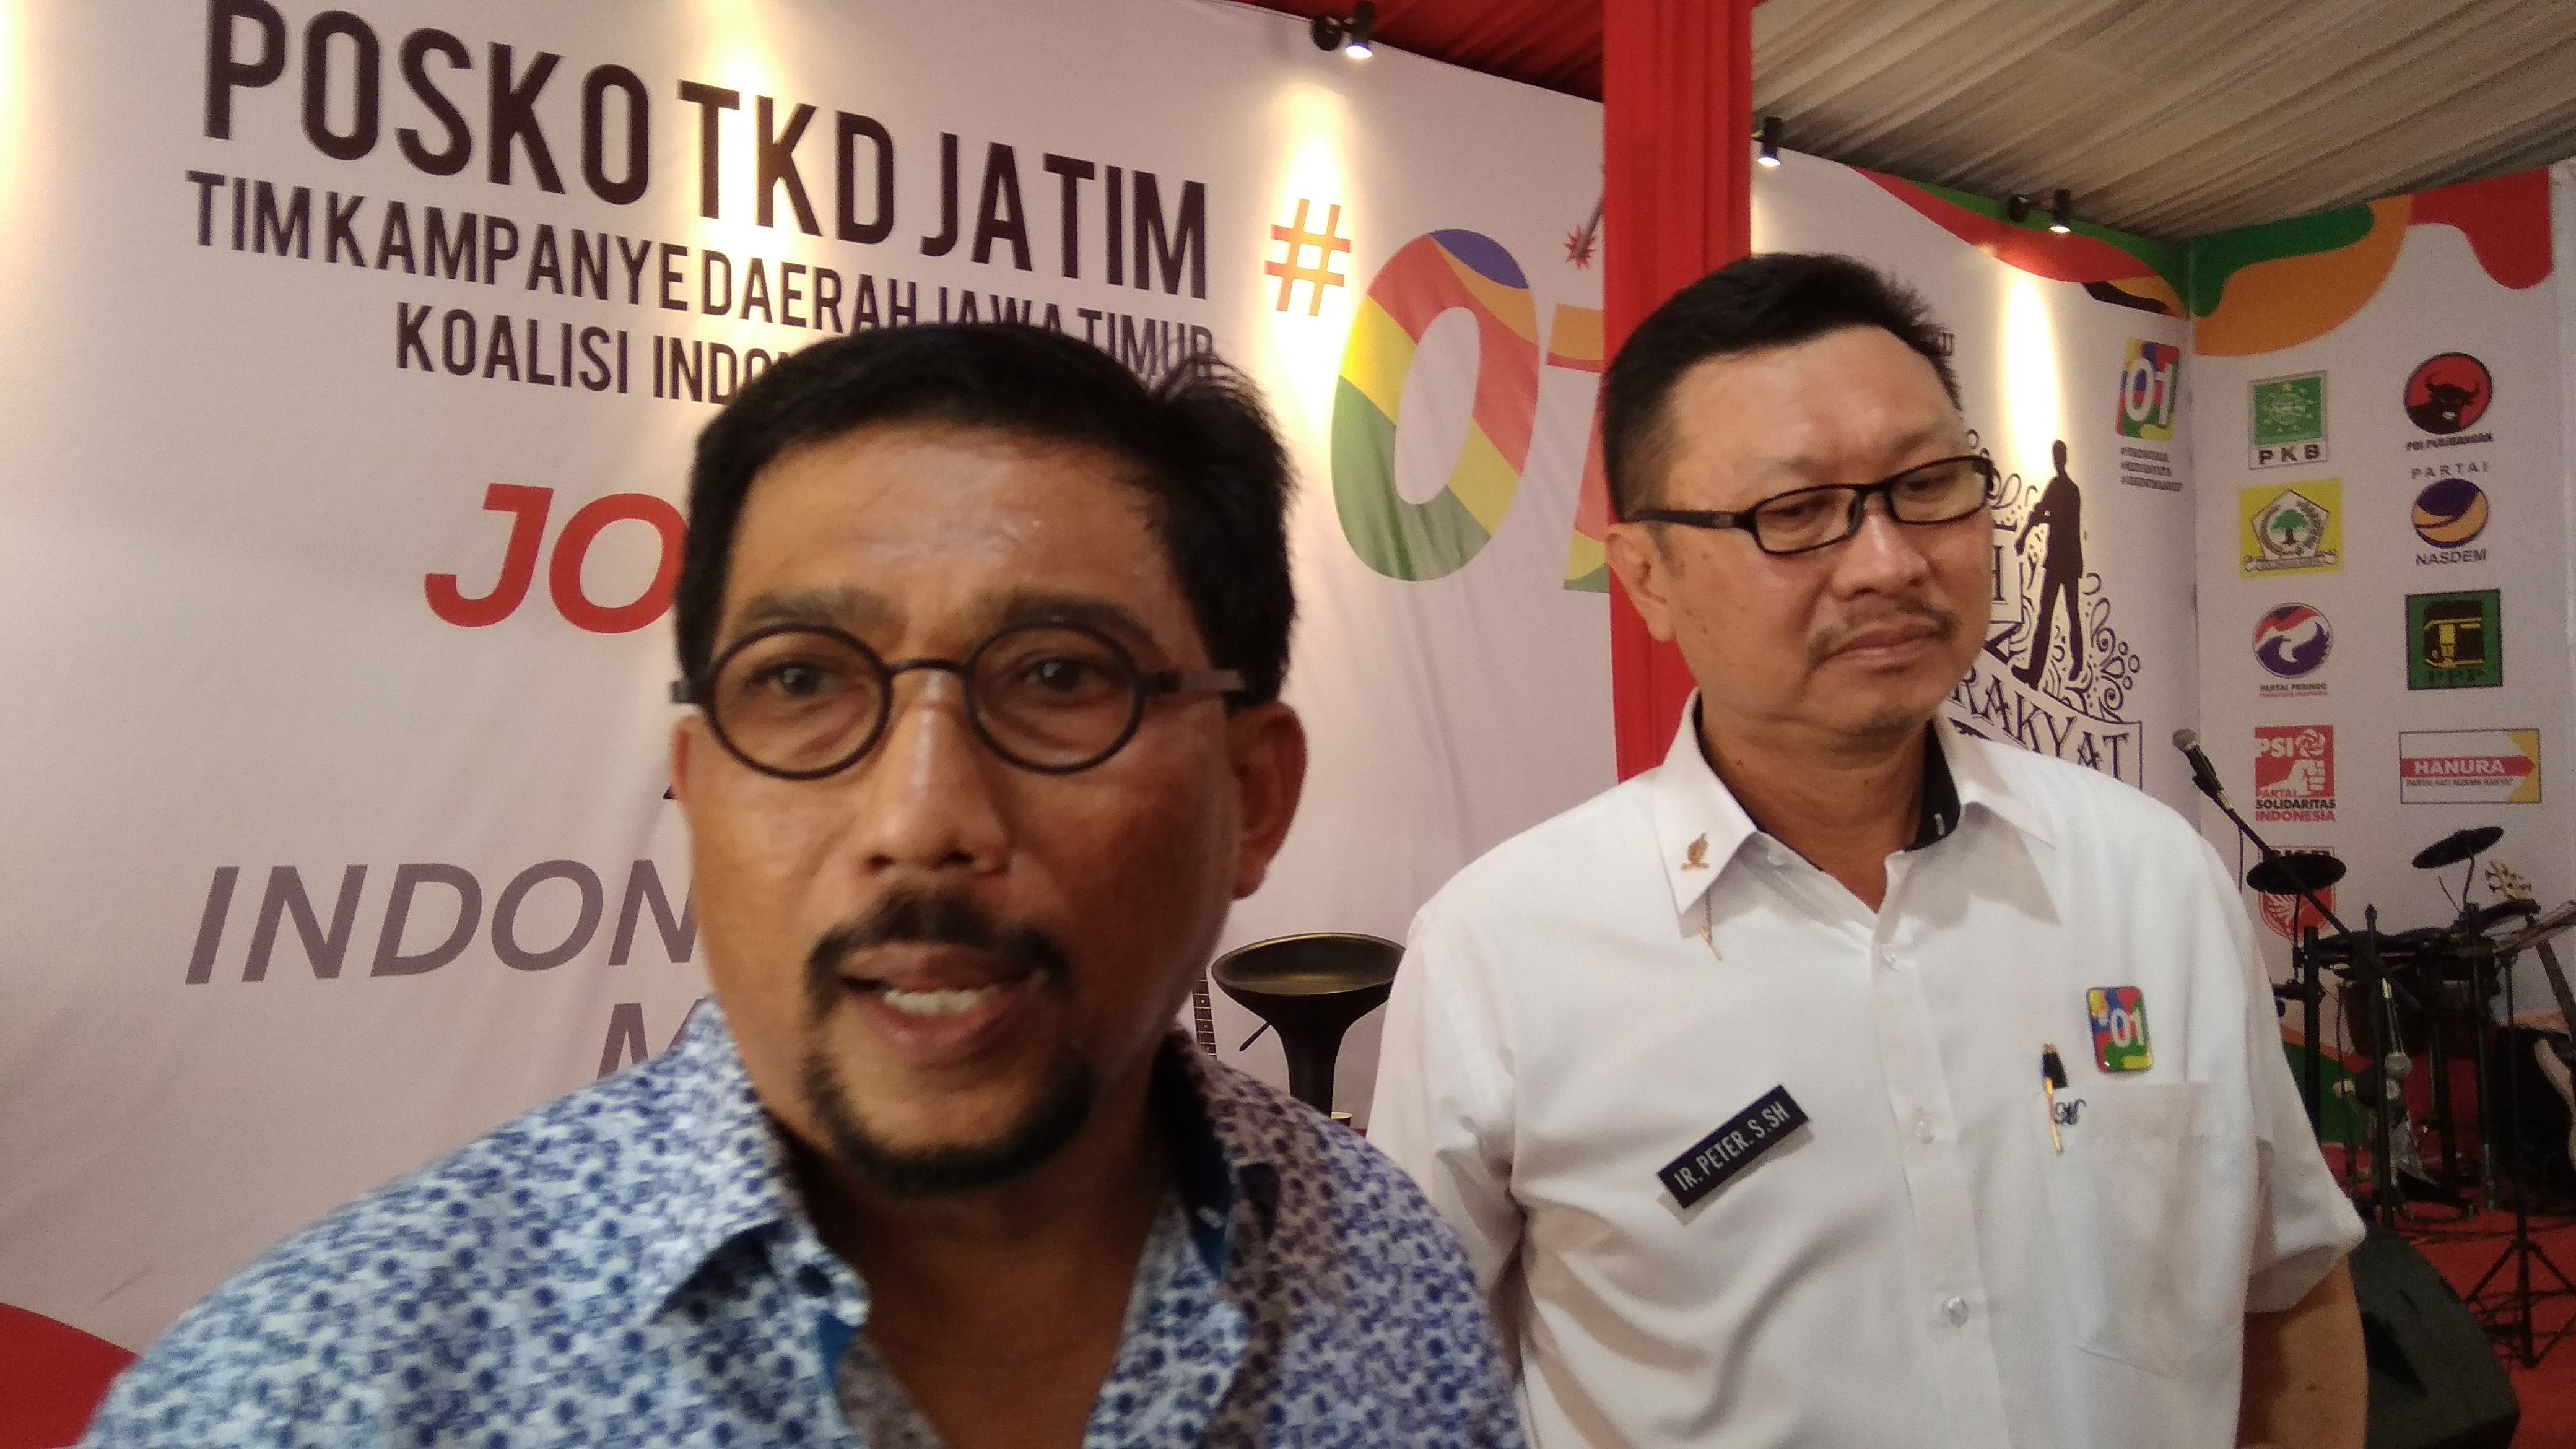 Madura Dan Tapal Kuda, Fokus TKD Jokowi Amin Untuk Menang